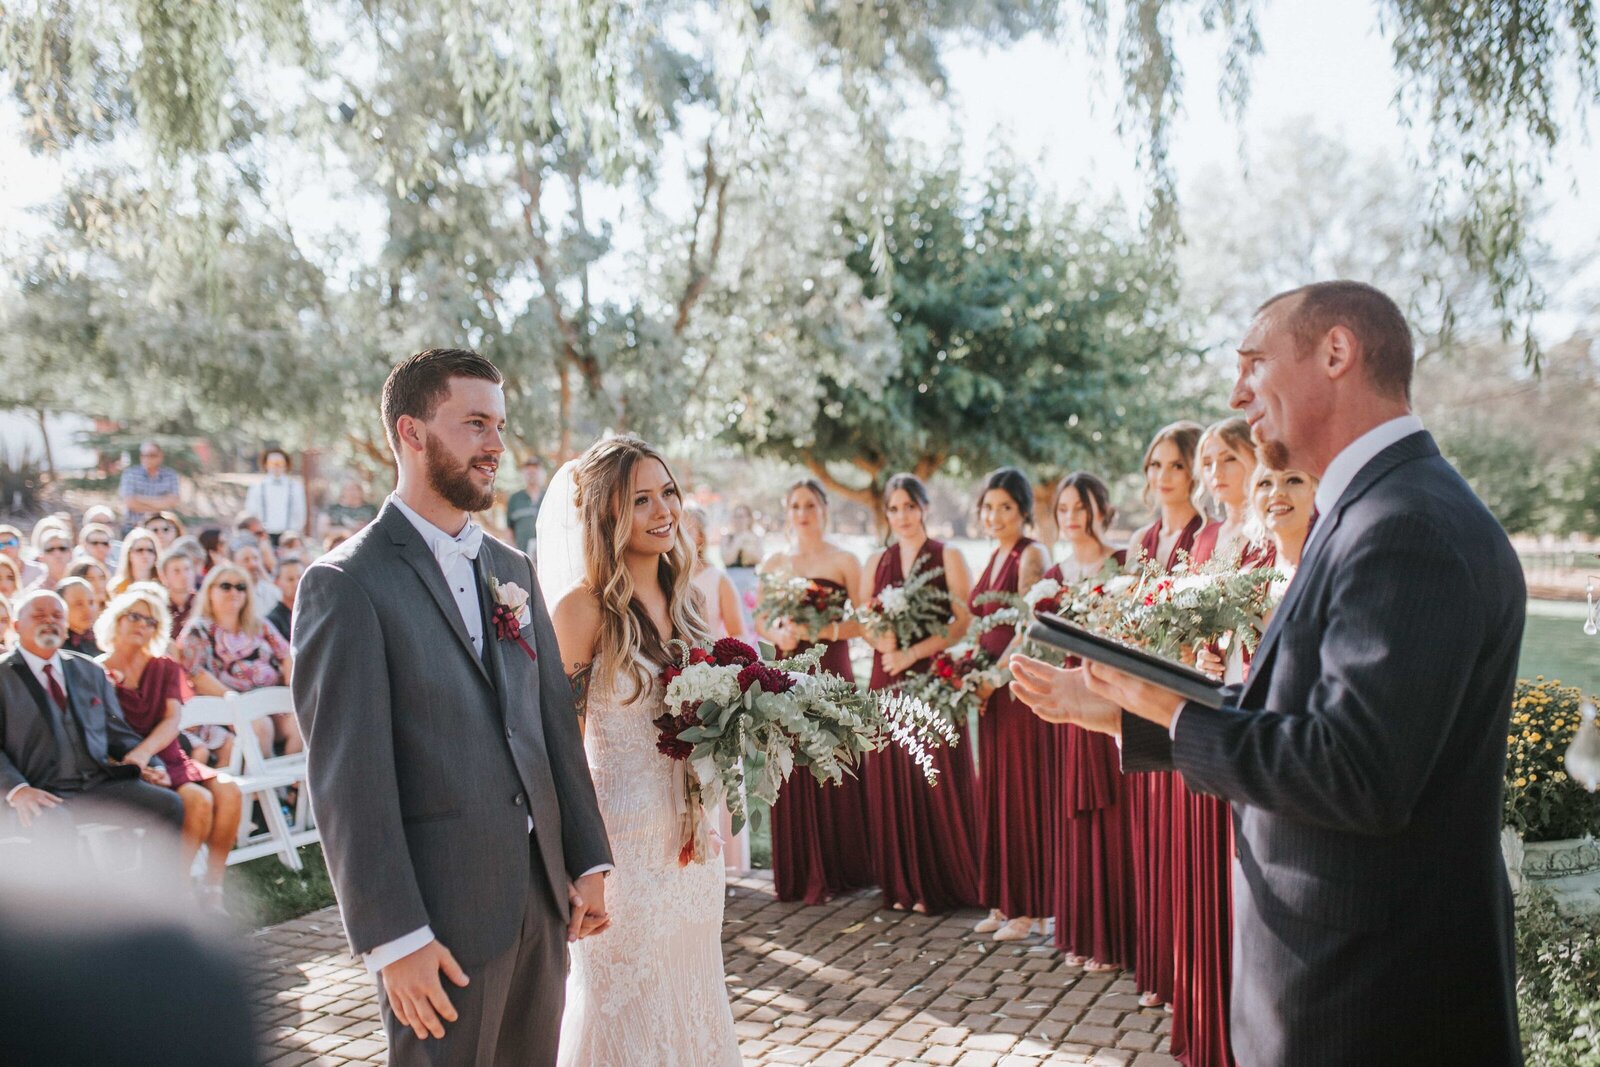 Lake Tahoe wedding photographer captures  wedding ceremony with bride and groom